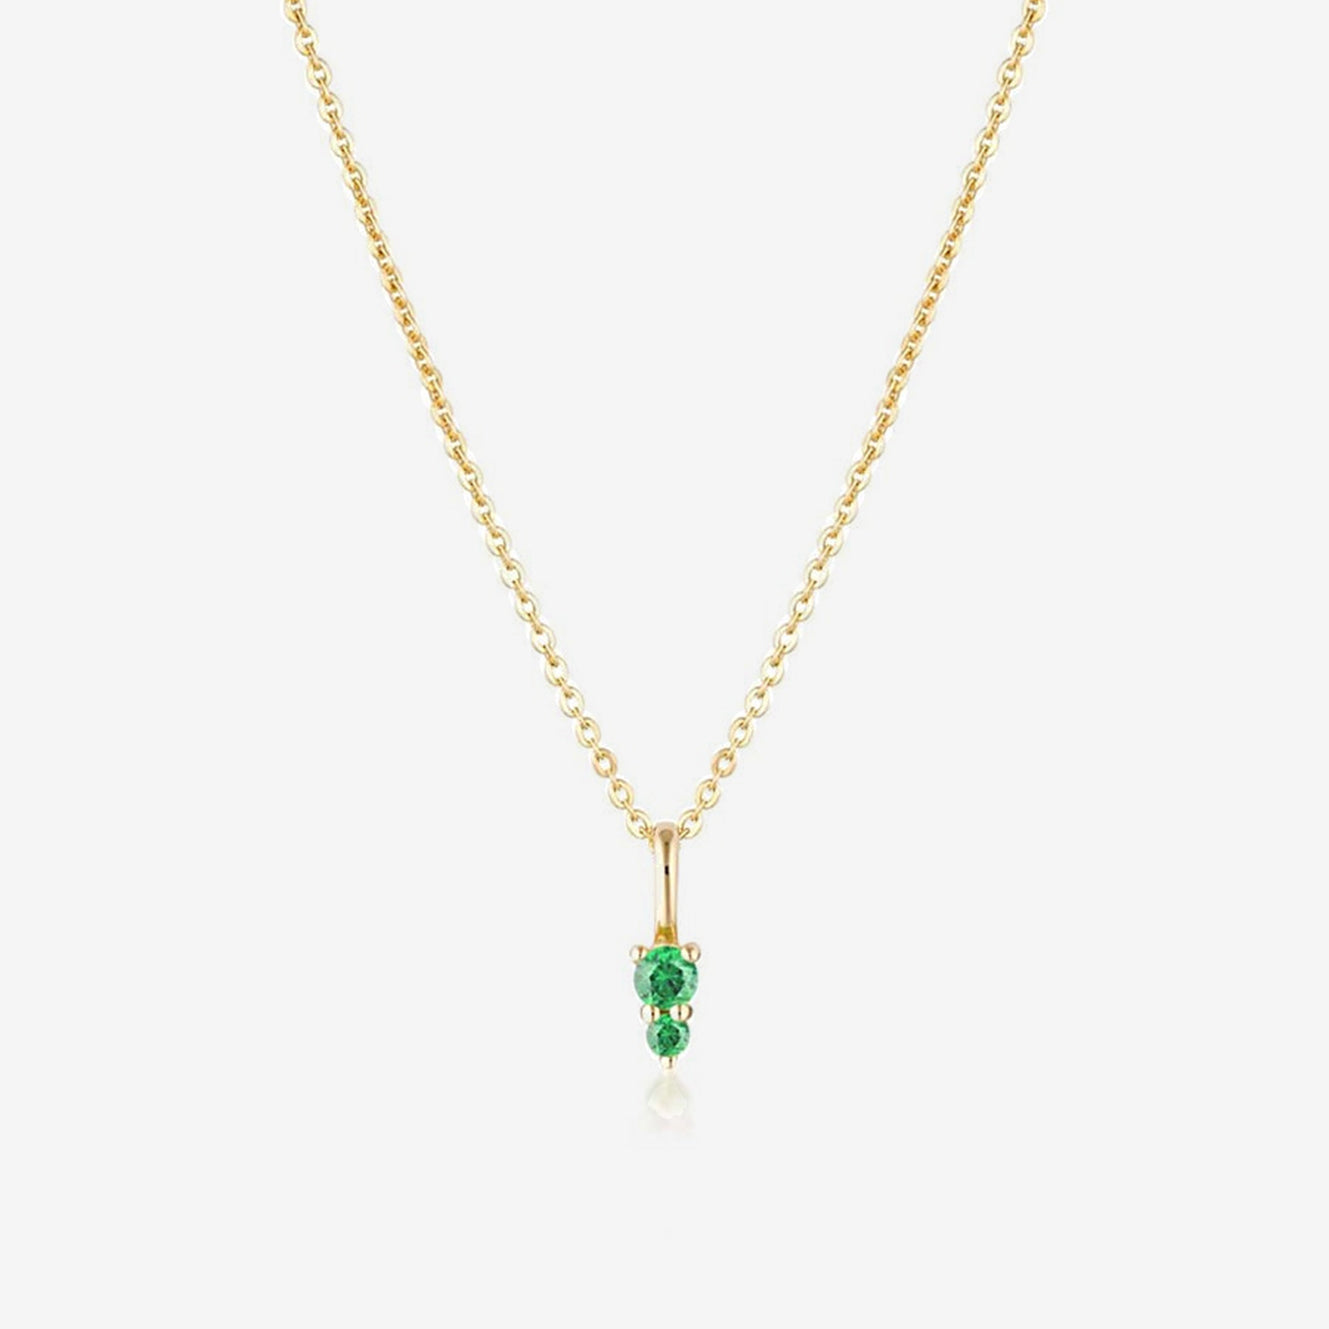 Linda Tahija - Binary Gemstone Necklace - Gold Plated - Created Emerald